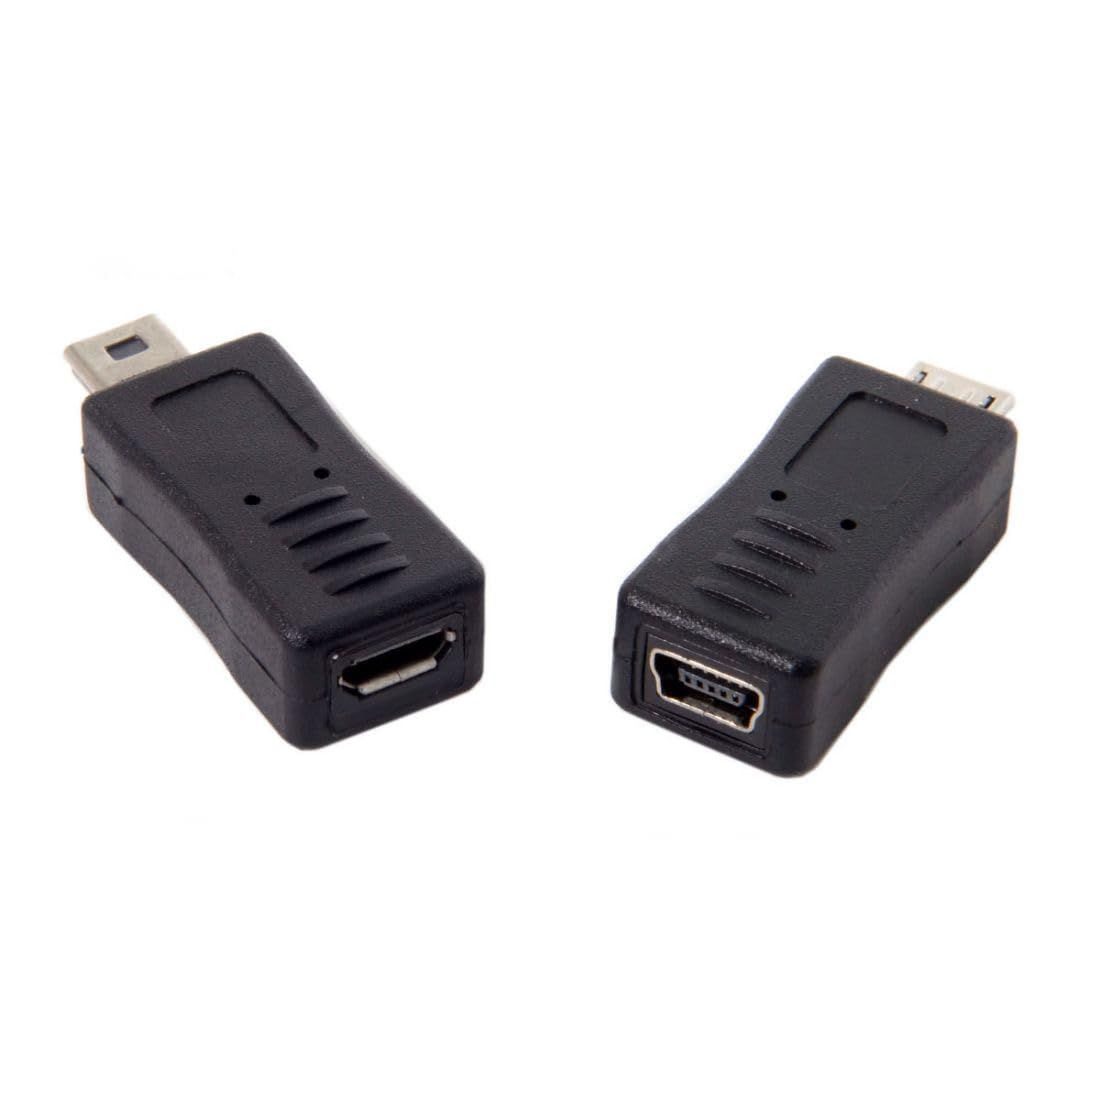 Переходник Mini USB to Micro USB. Адаптер Mini USB to 5.5. Micro USB female to Mini USB male. Переходник Mini HDMI male на USB female.